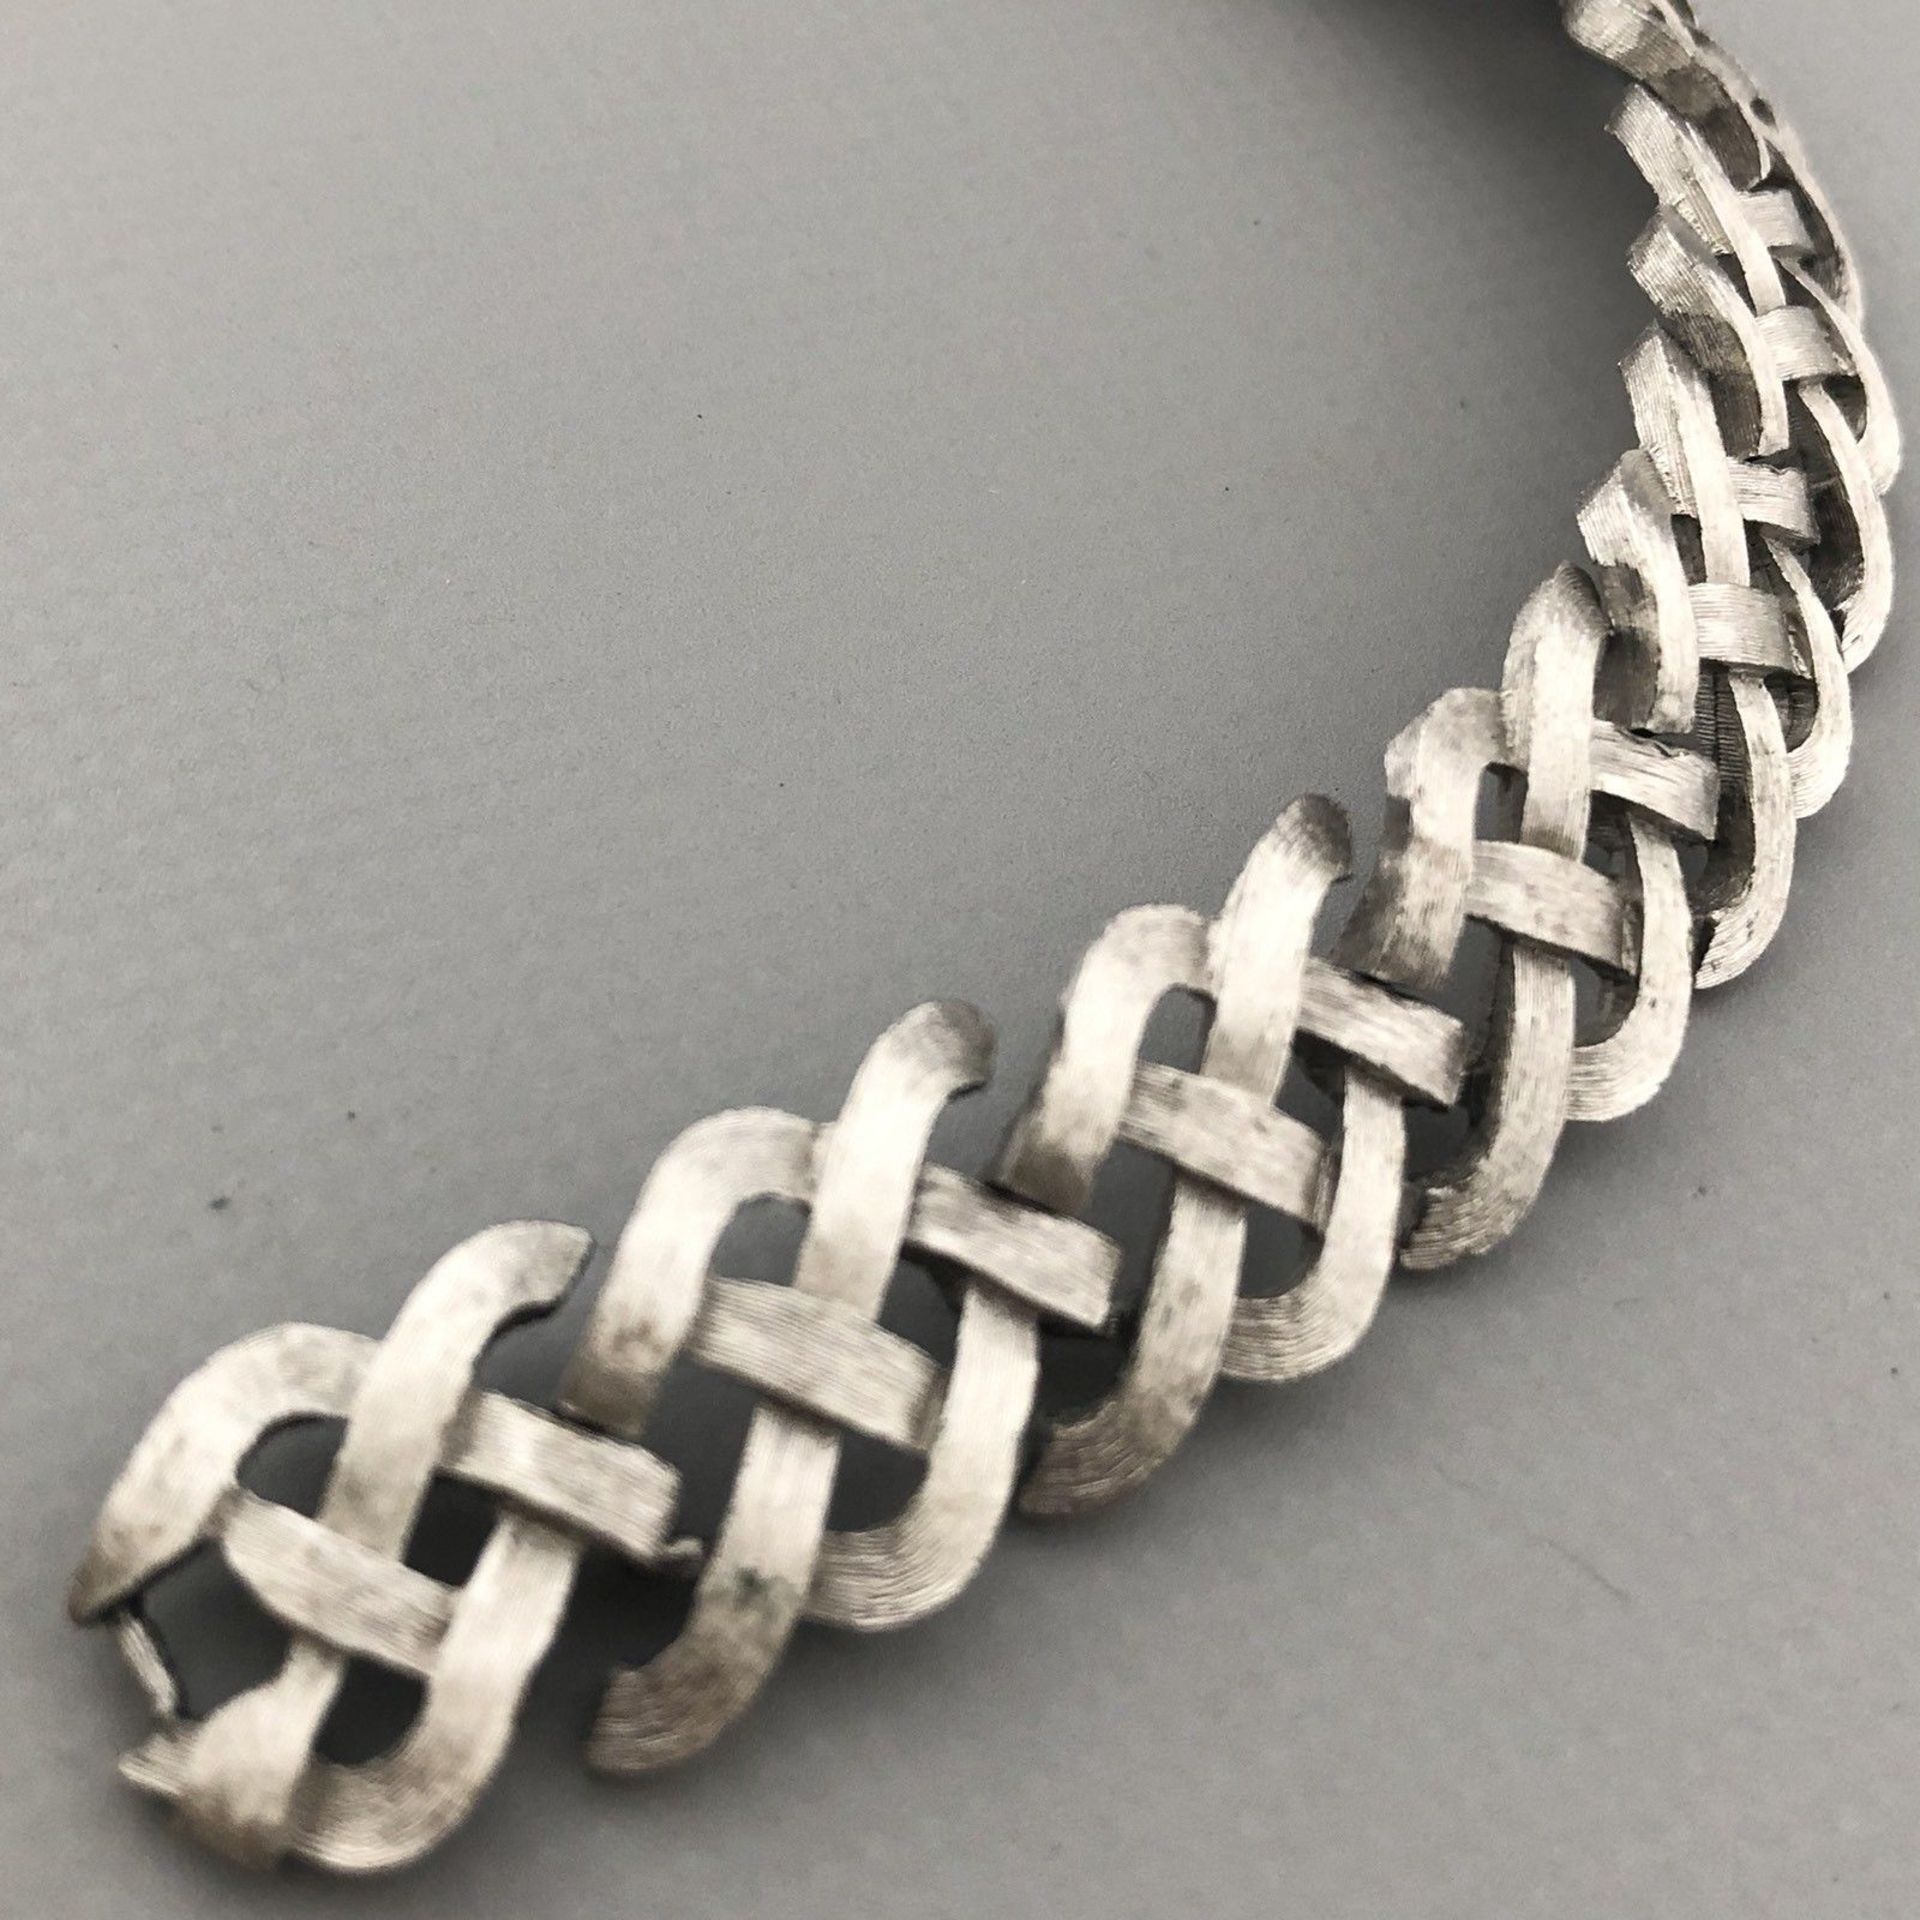 Vintage mid-century bracelet by TRIFARI textured silver tone cross hatch design - Image 2 of 4